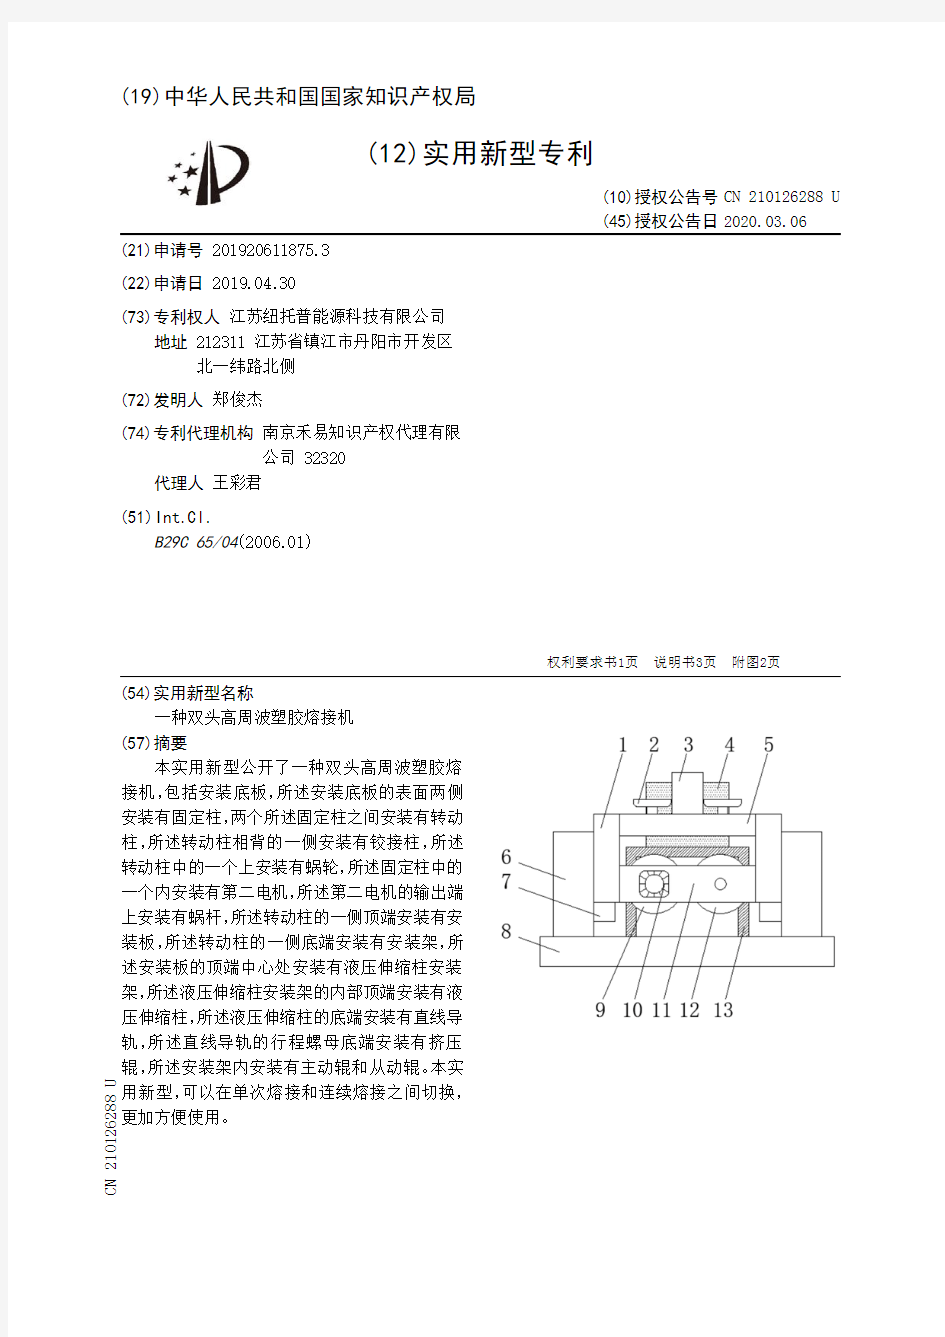 【CN210126288U】一种双头高周波塑胶熔接机【专利】